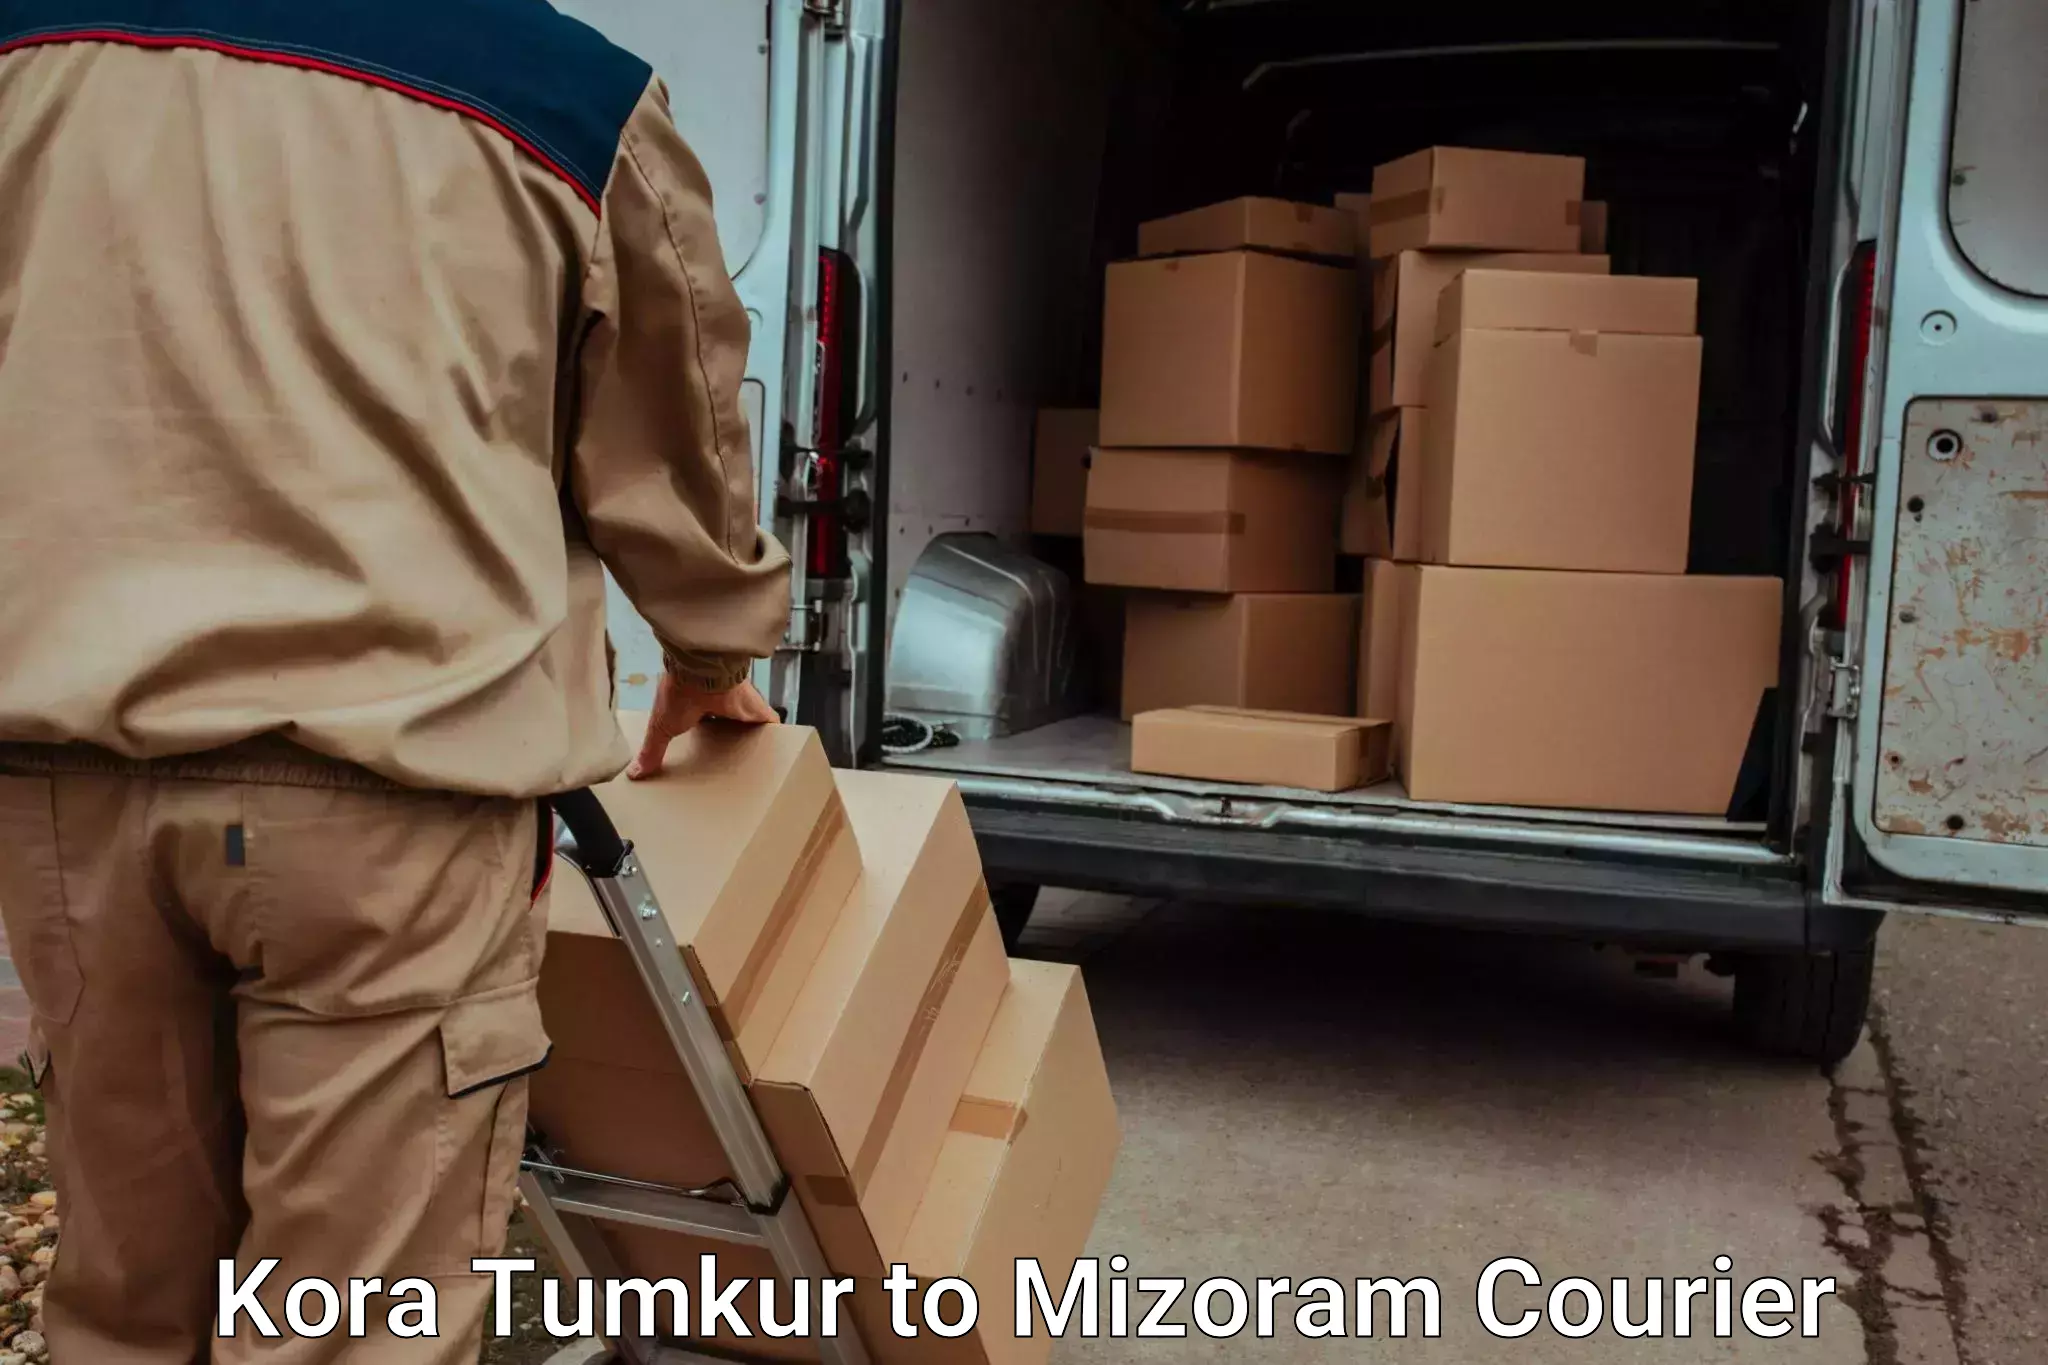 Trusted relocation experts Kora Tumkur to Mizoram